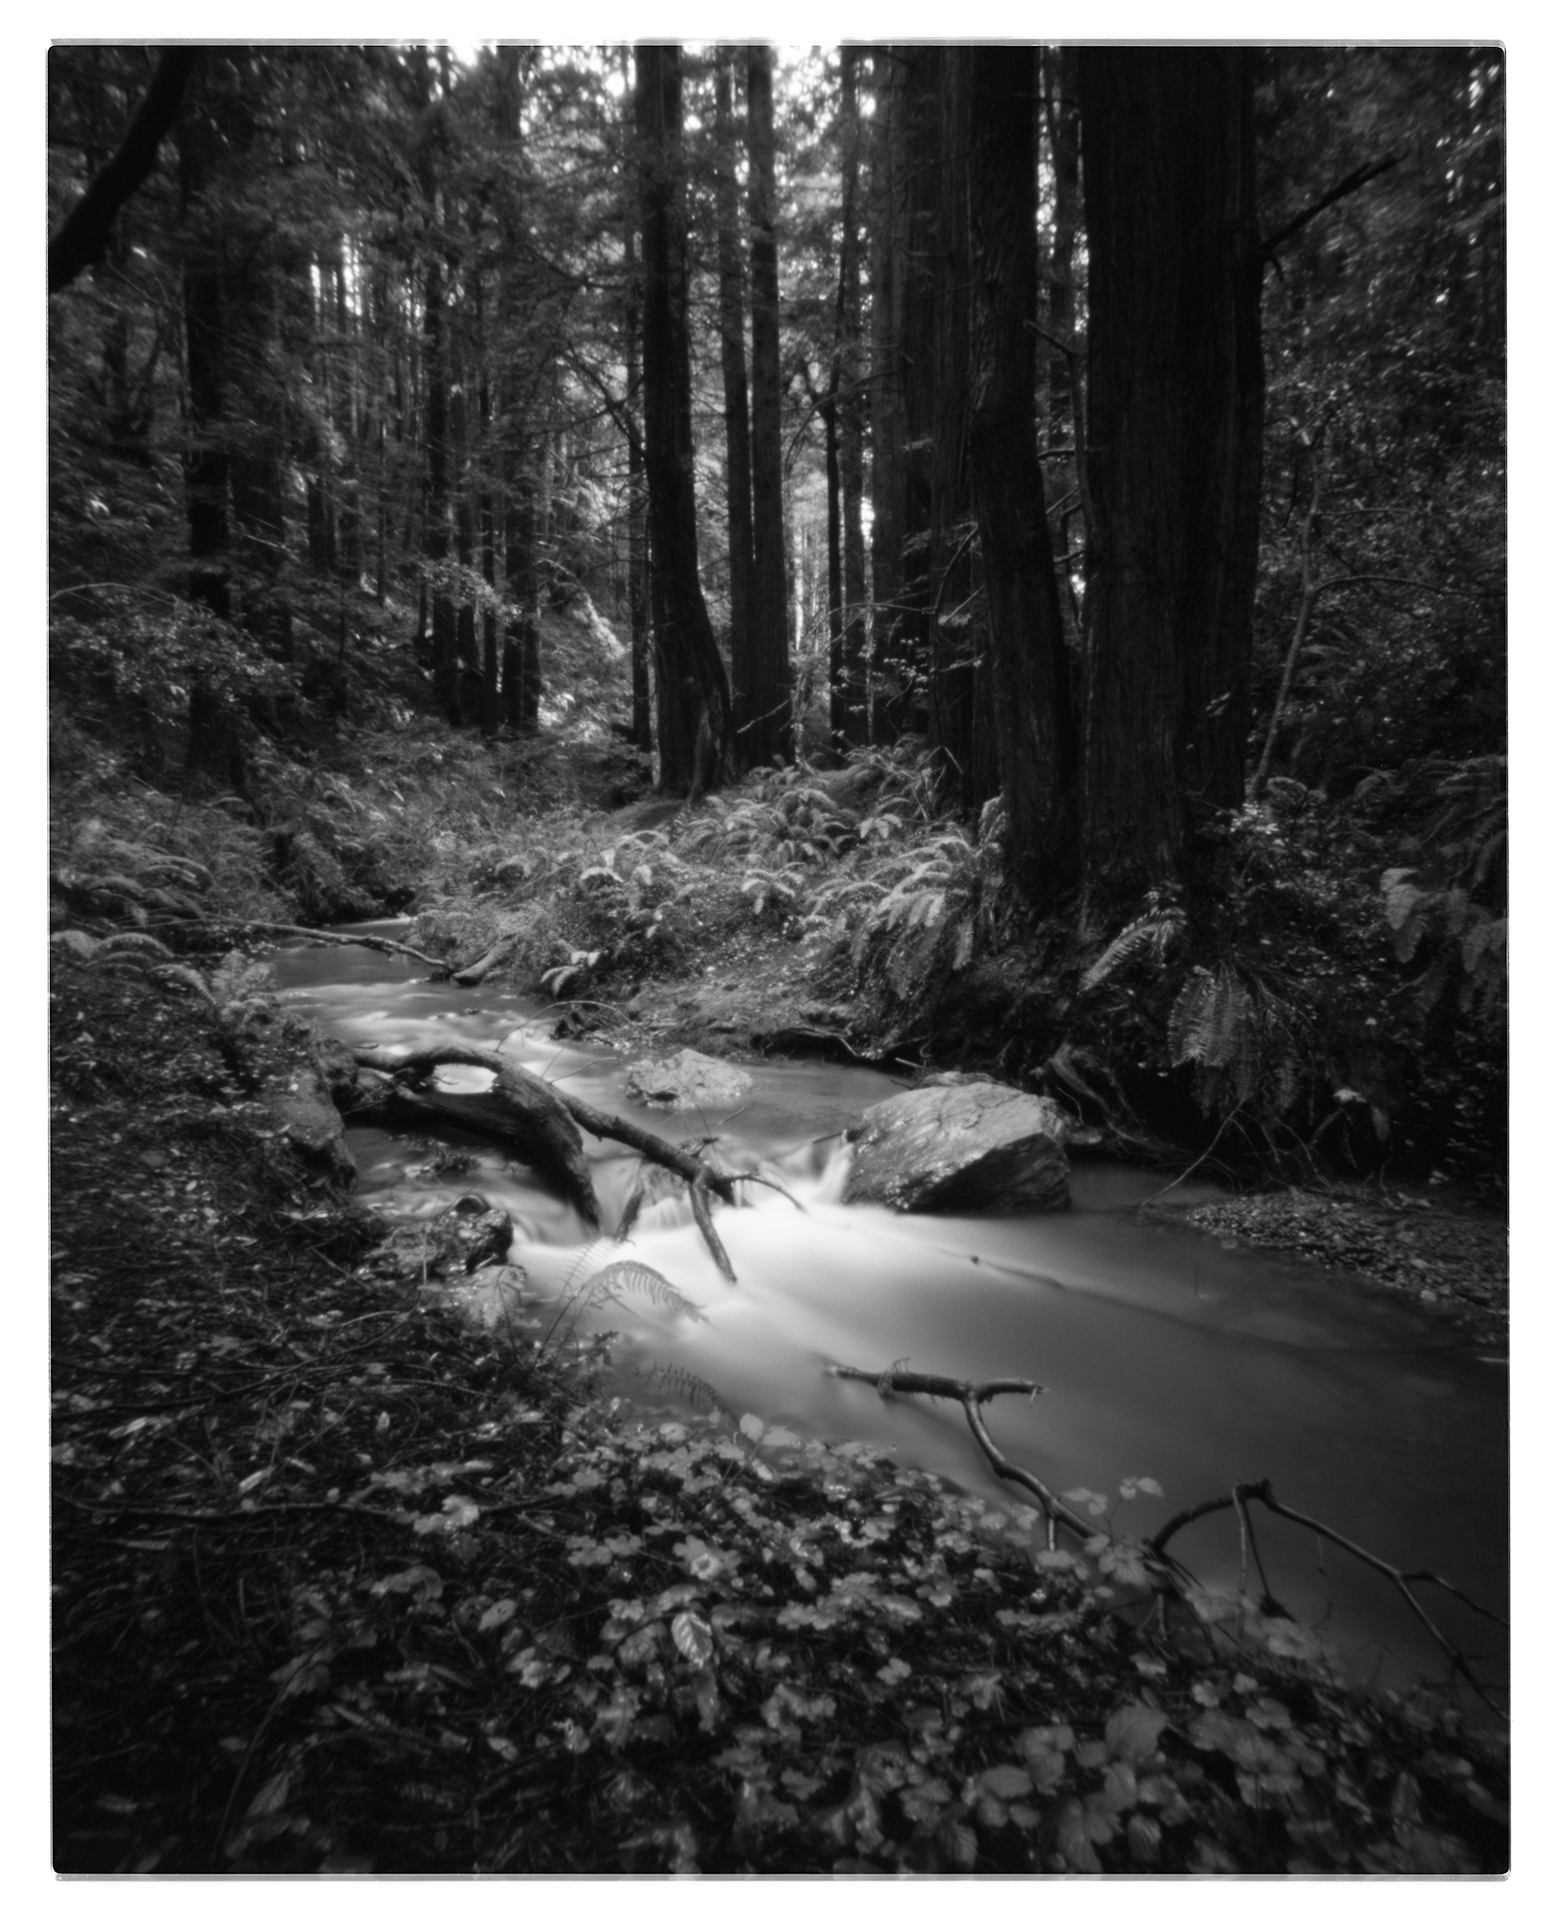 @klizana · 16h Walking among redwoods. CameraIlford TiTAN 4x5 Pinhole Film framesIlford FP4 Stopwatch195 secs. exposure (open for full size) #filmphotography #pinhole #Ilfordphoto #fridayfavourites #believeinfilm